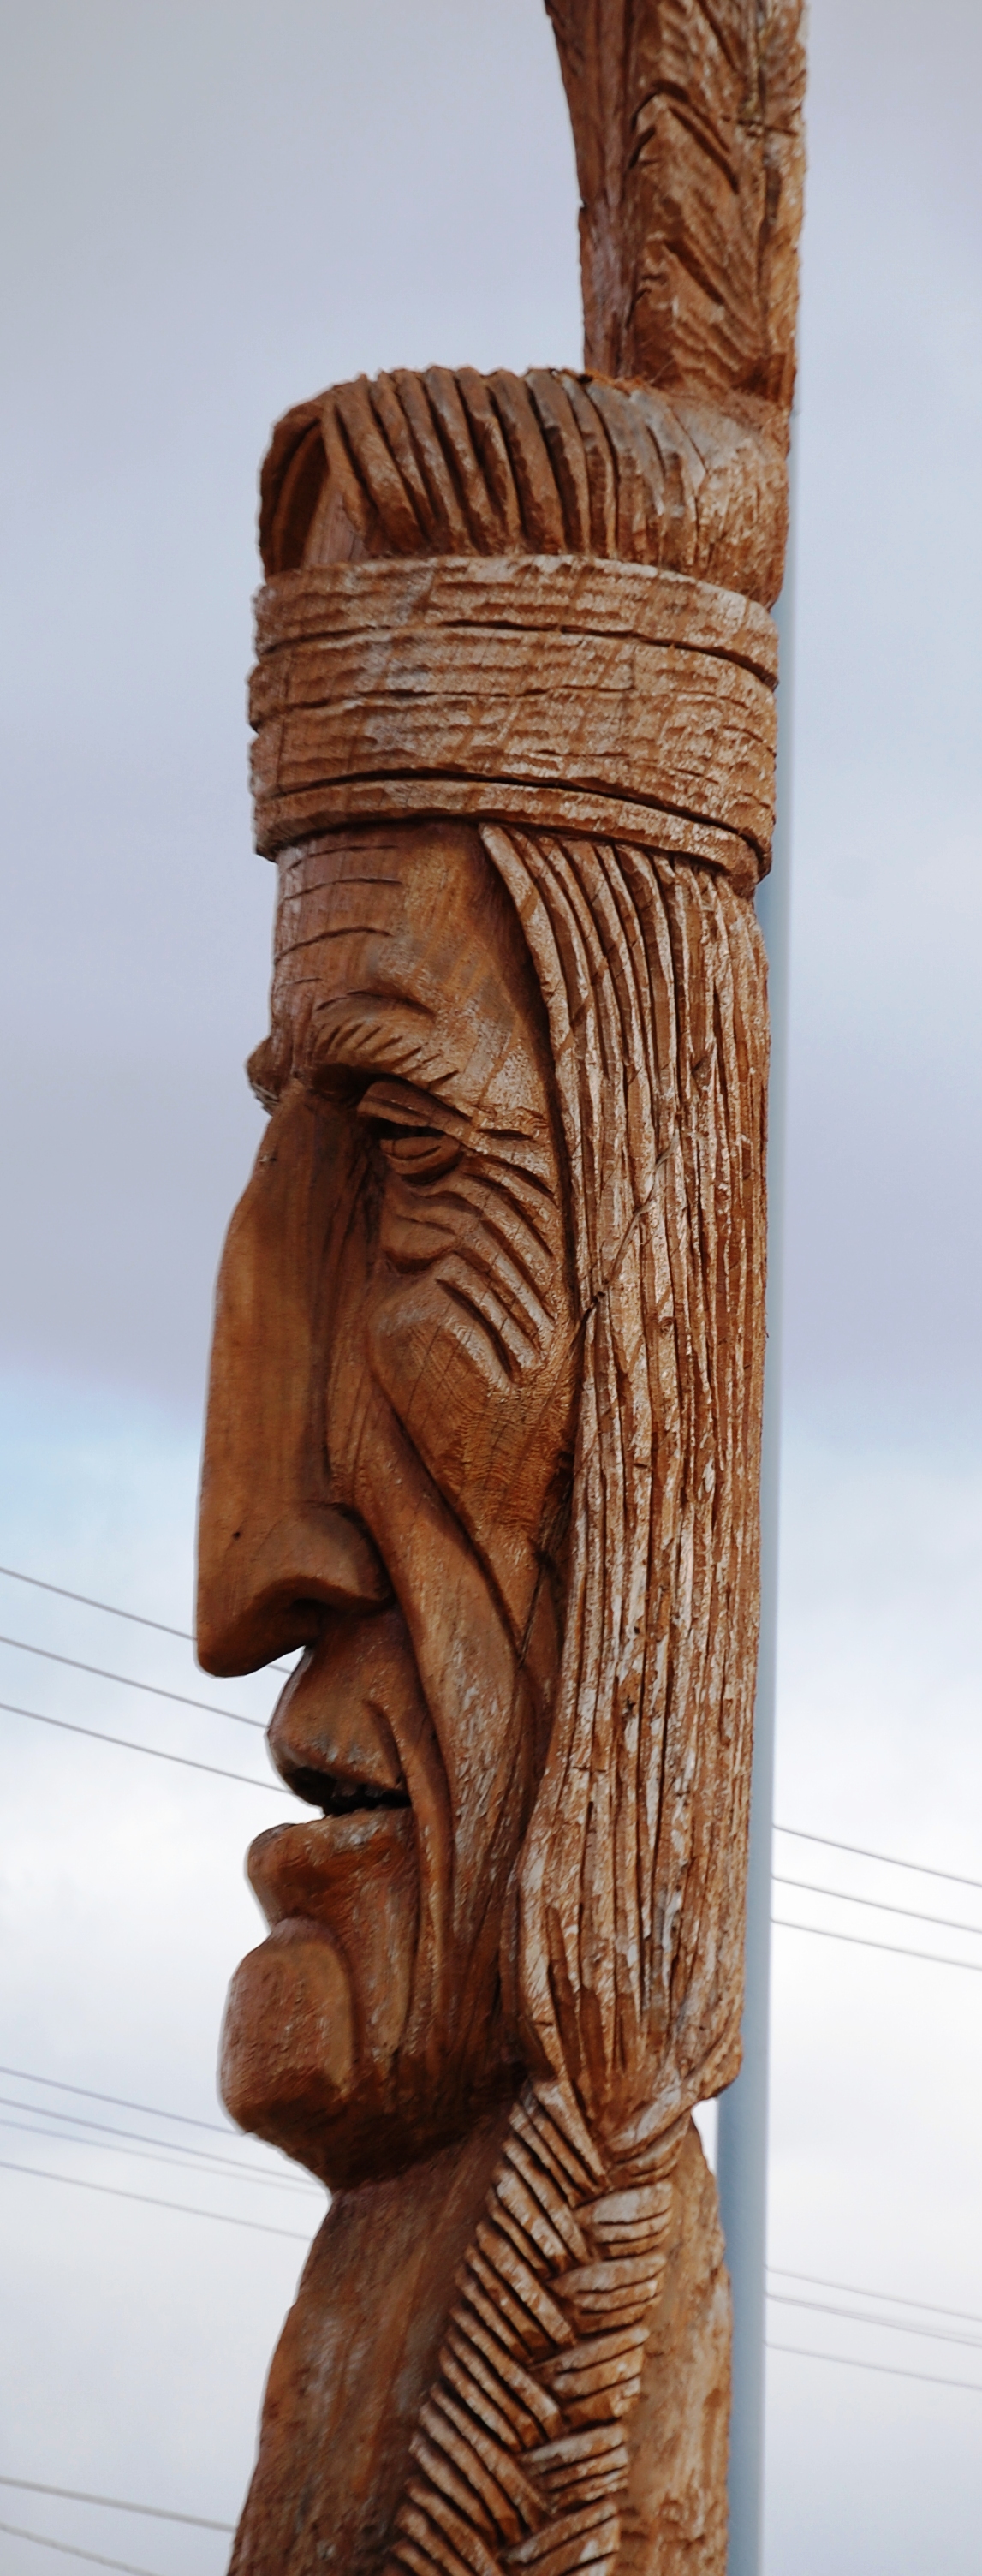 Giant Indian Head wood carving in Idaho Falls, Idaho | Offbeat ...